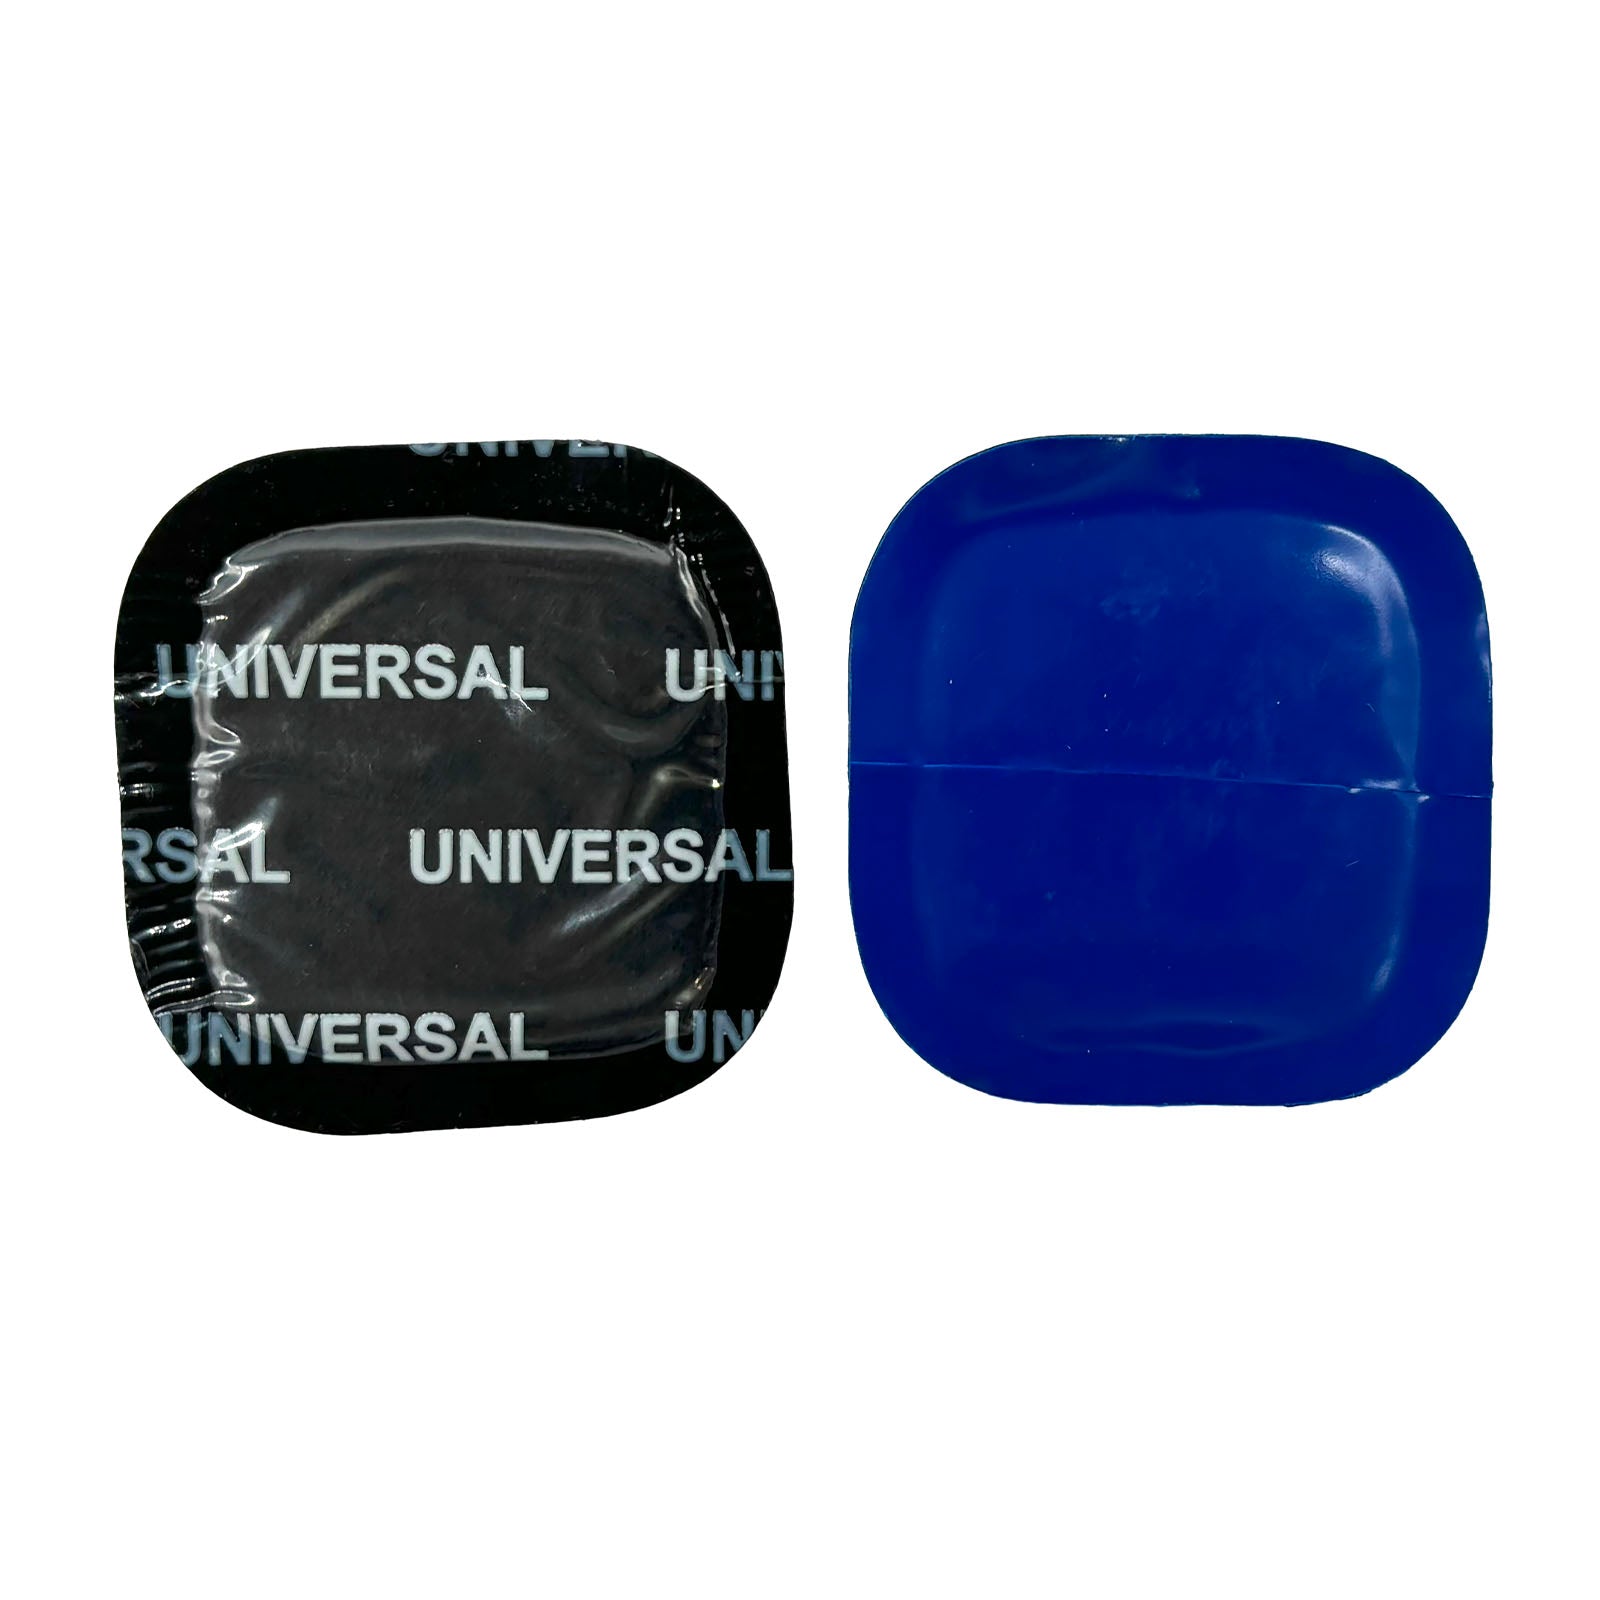 Kex UP-45P Universal Patch, 1-3/4" Square (300 unit bucket)